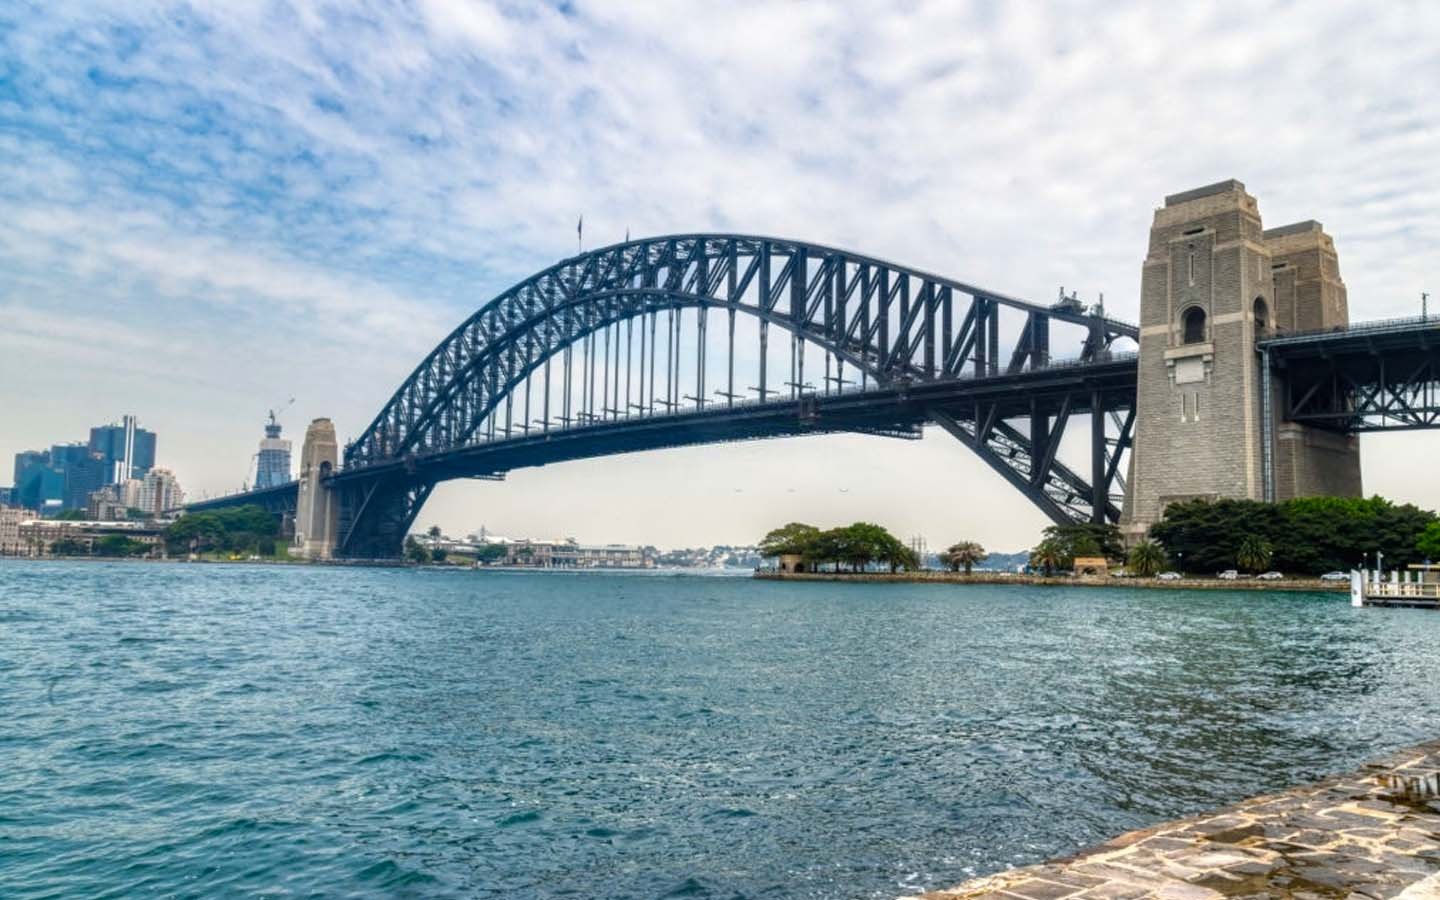 Harbour bridge. Мост Харбор-бридж в Сиднее. Мост Харбор бридж в Австралии. Харбор-бридж (Сидней, Австралия). Харбор-бридж Архитектор.